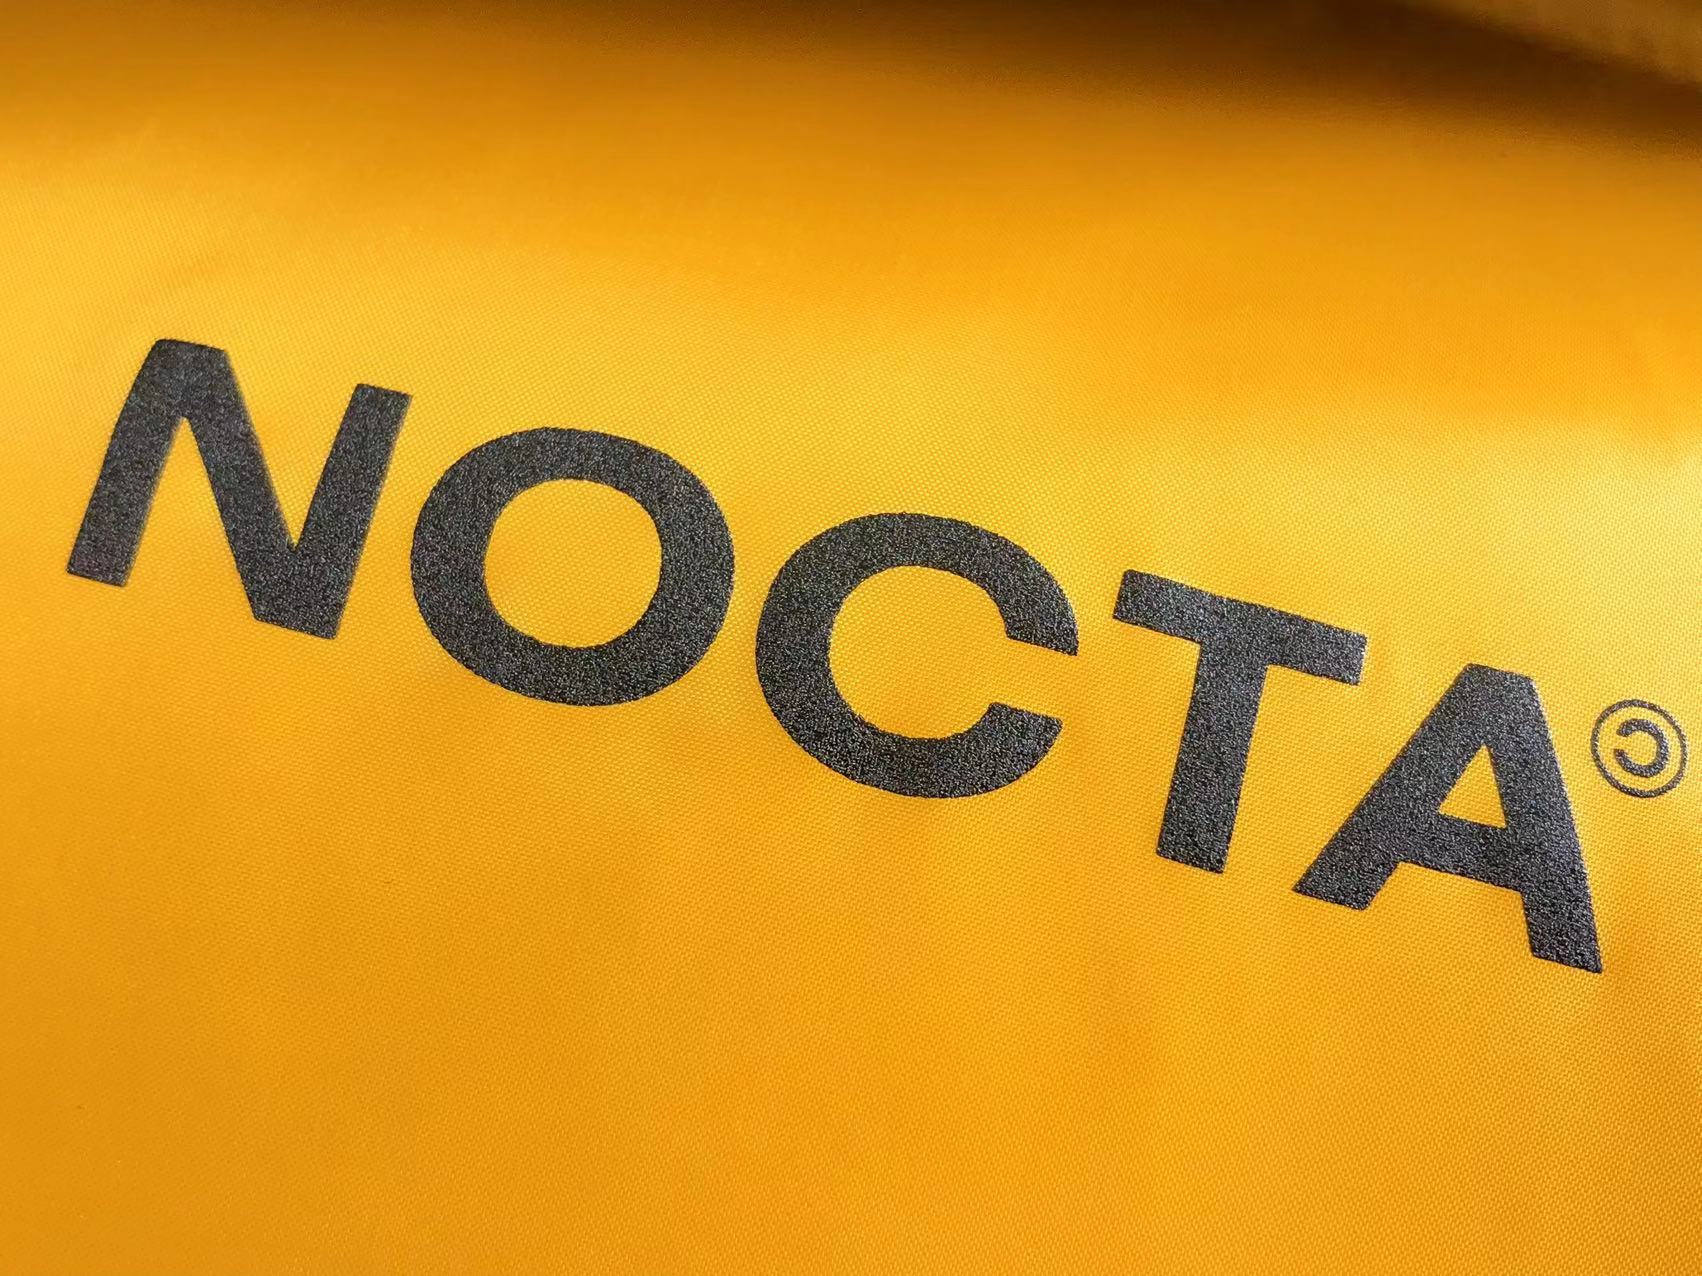 NOCTA Yellow Puffer Jacket